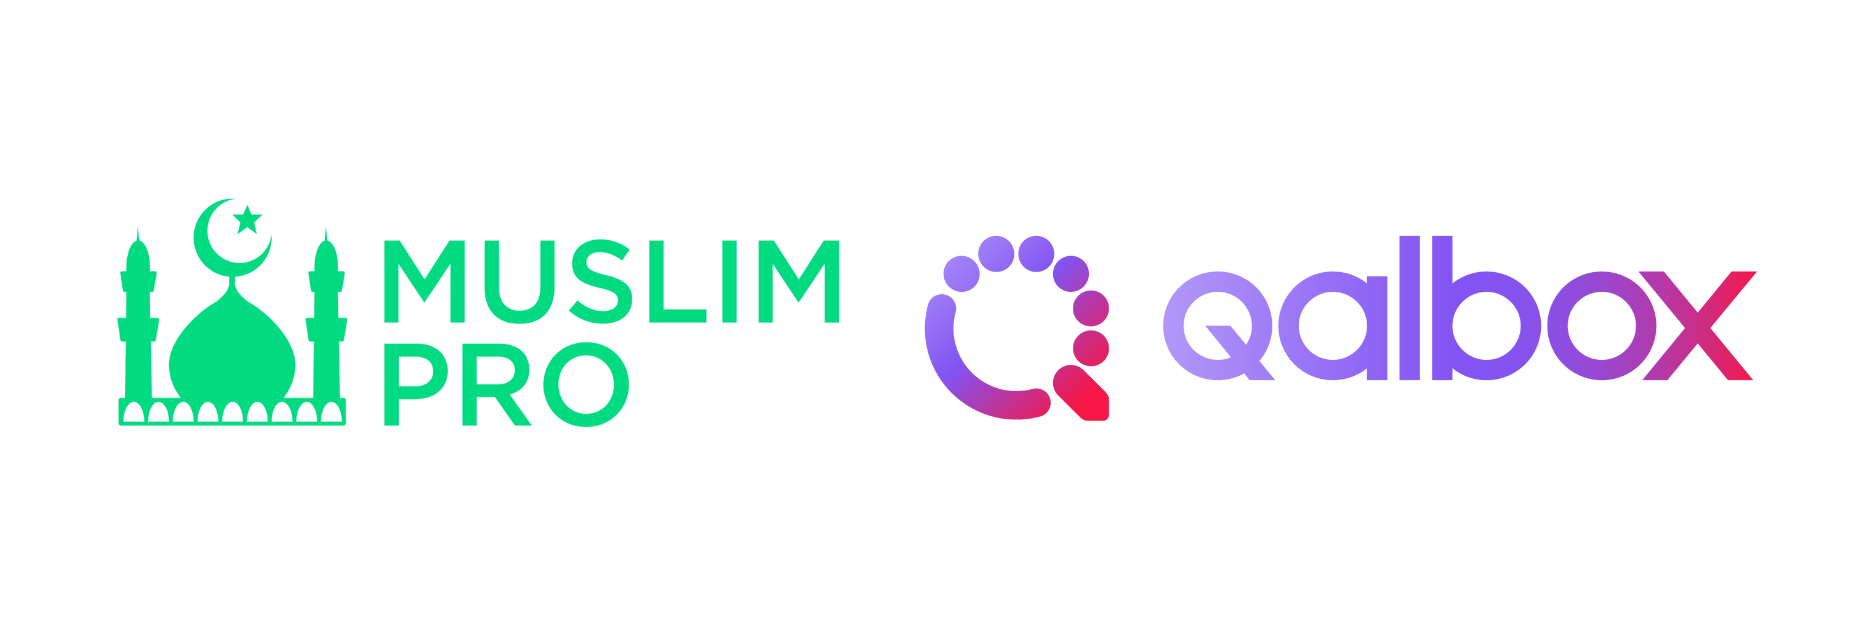 logo muslim pro + qalbox